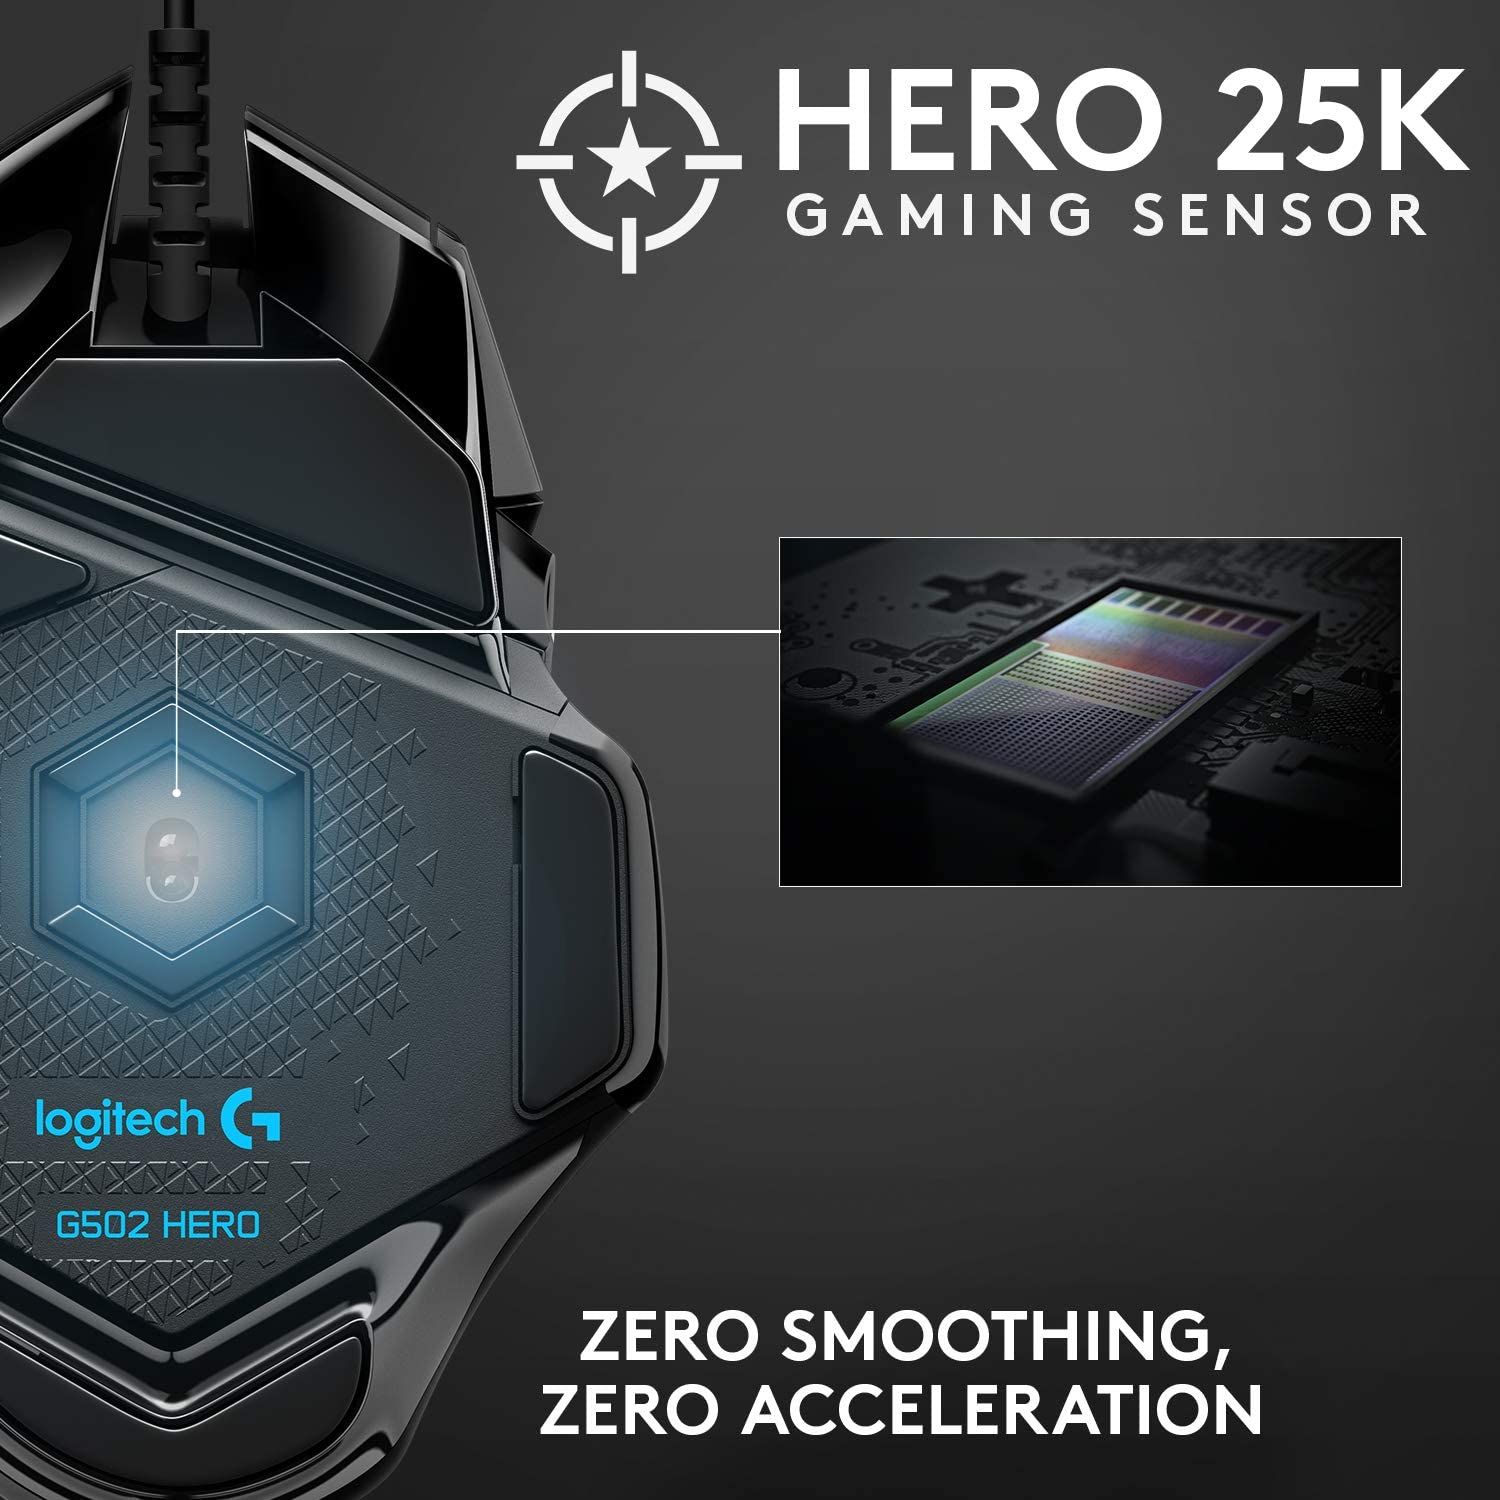 The gaming sensor view of Logitech G502 HERO